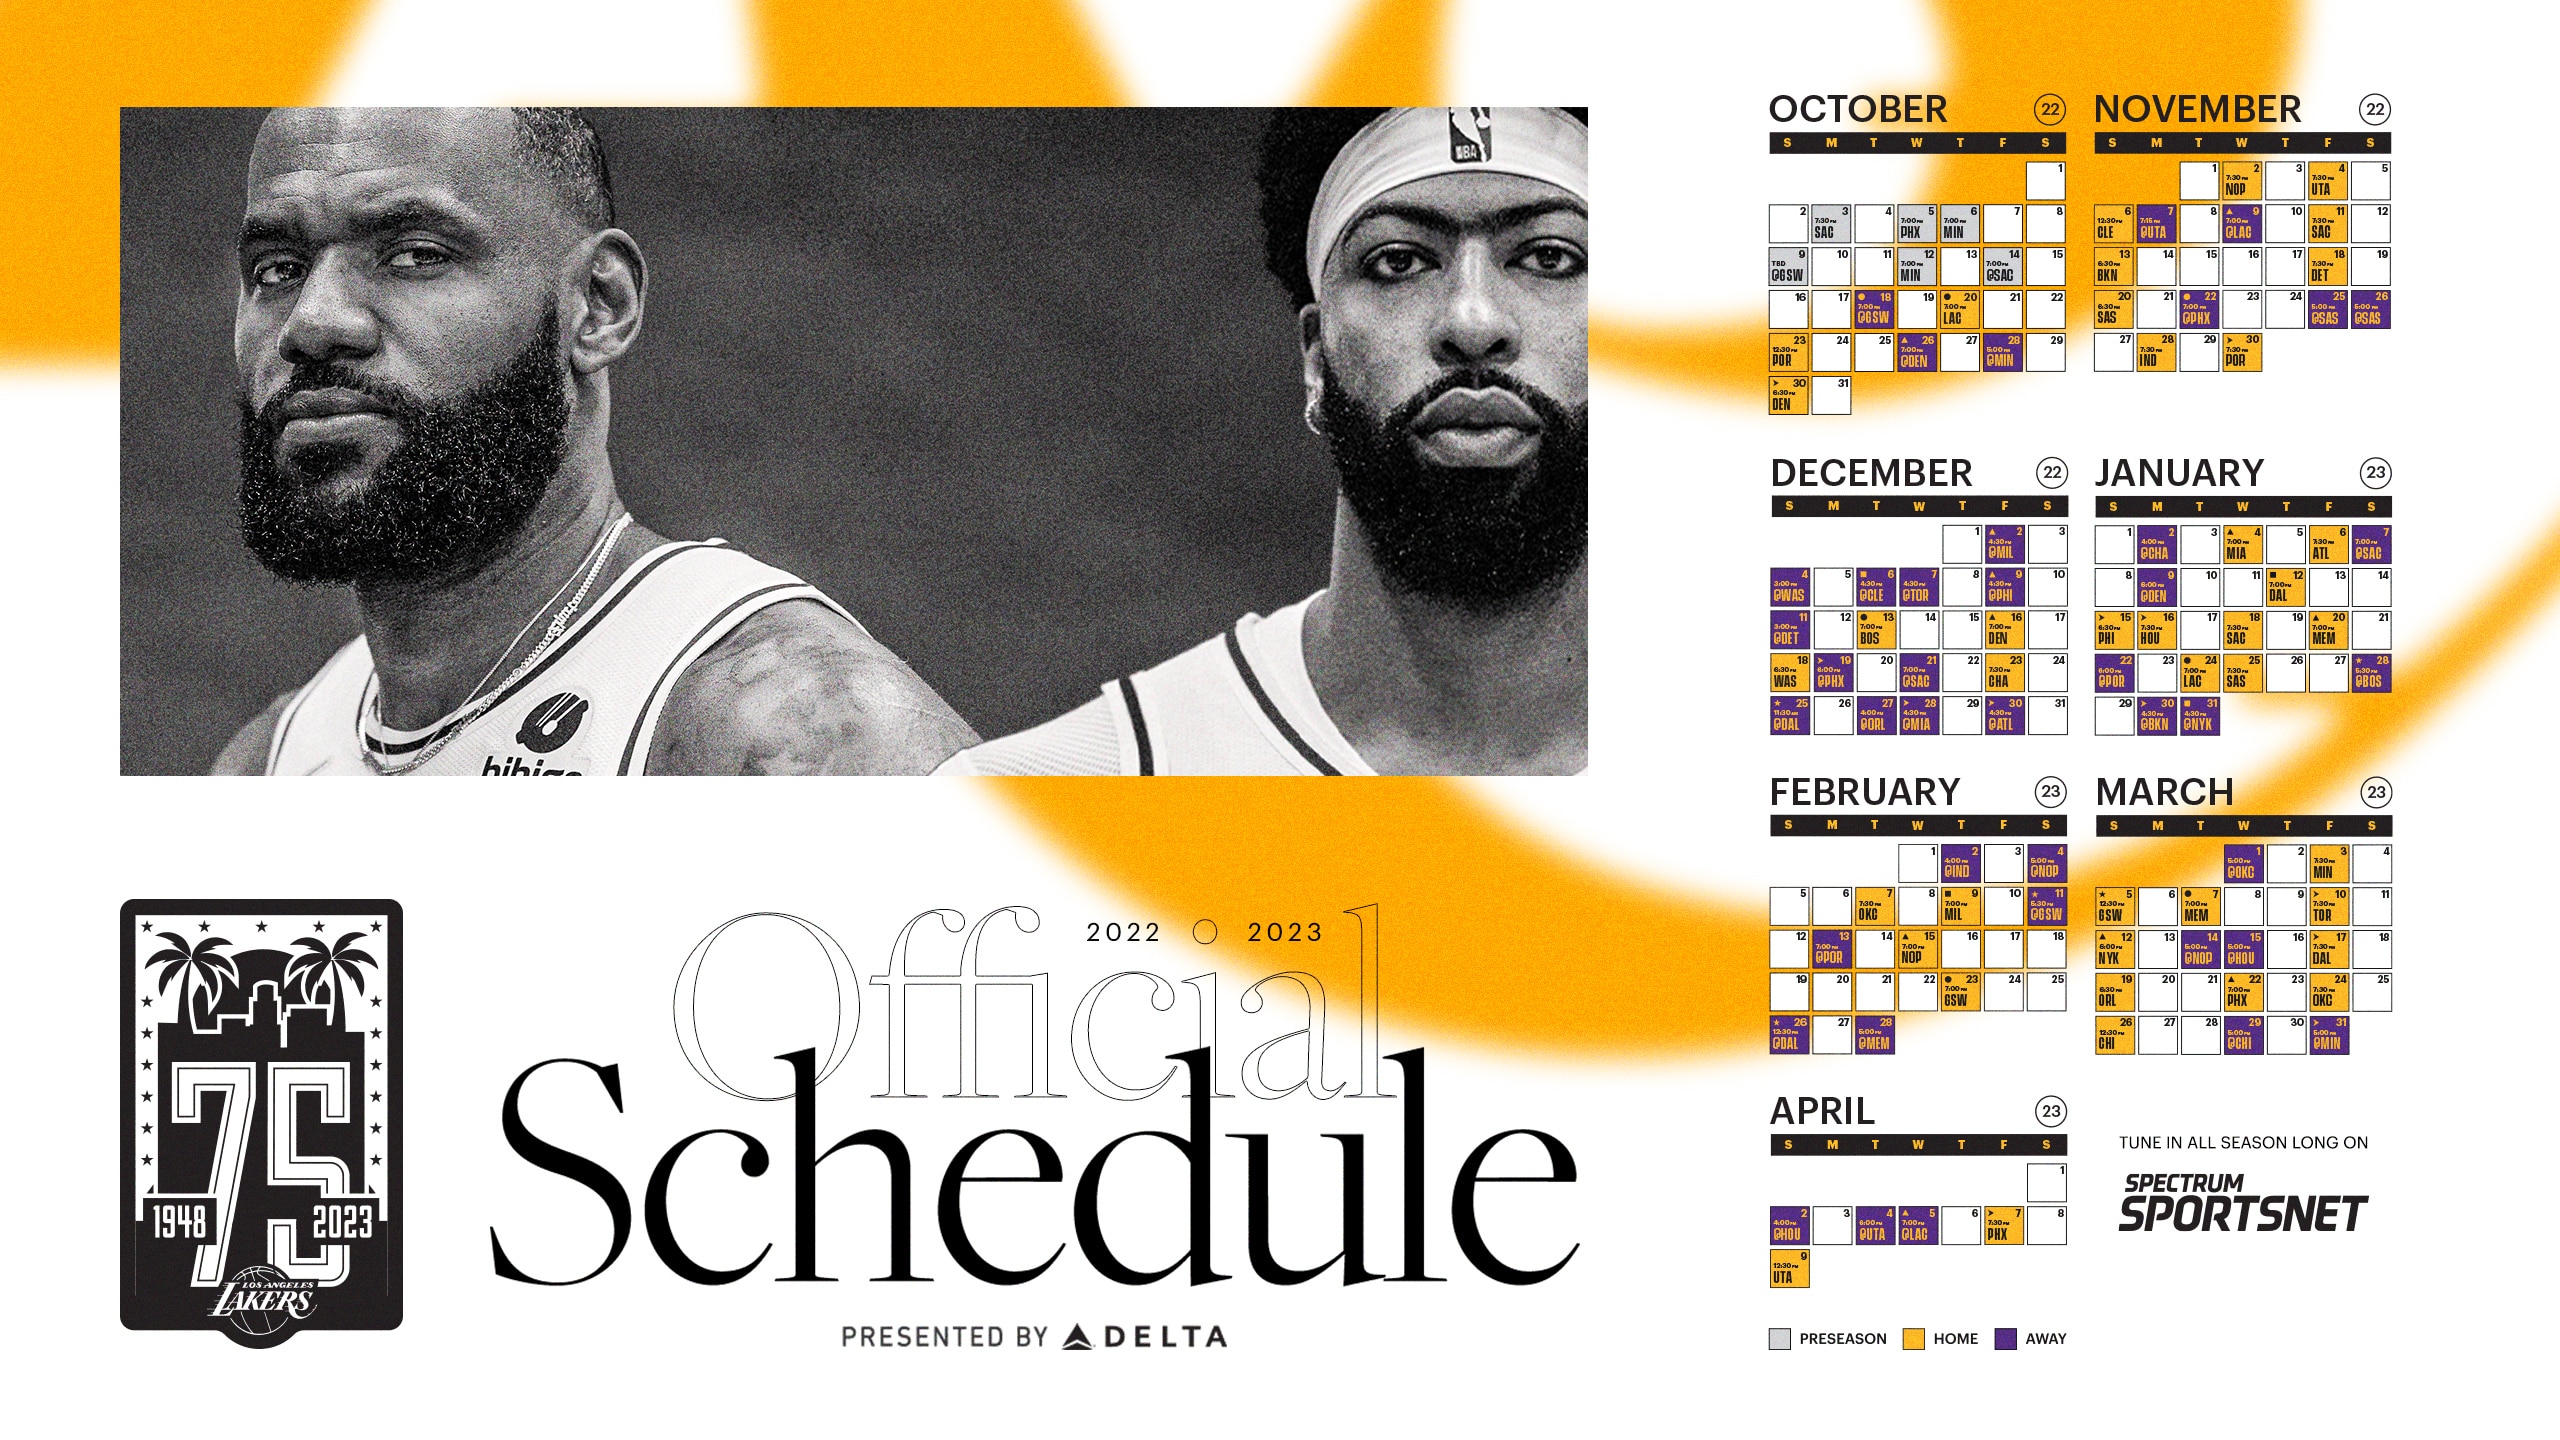 Wallpapers |Los Angeles Lakers | Los Angeles Lakers